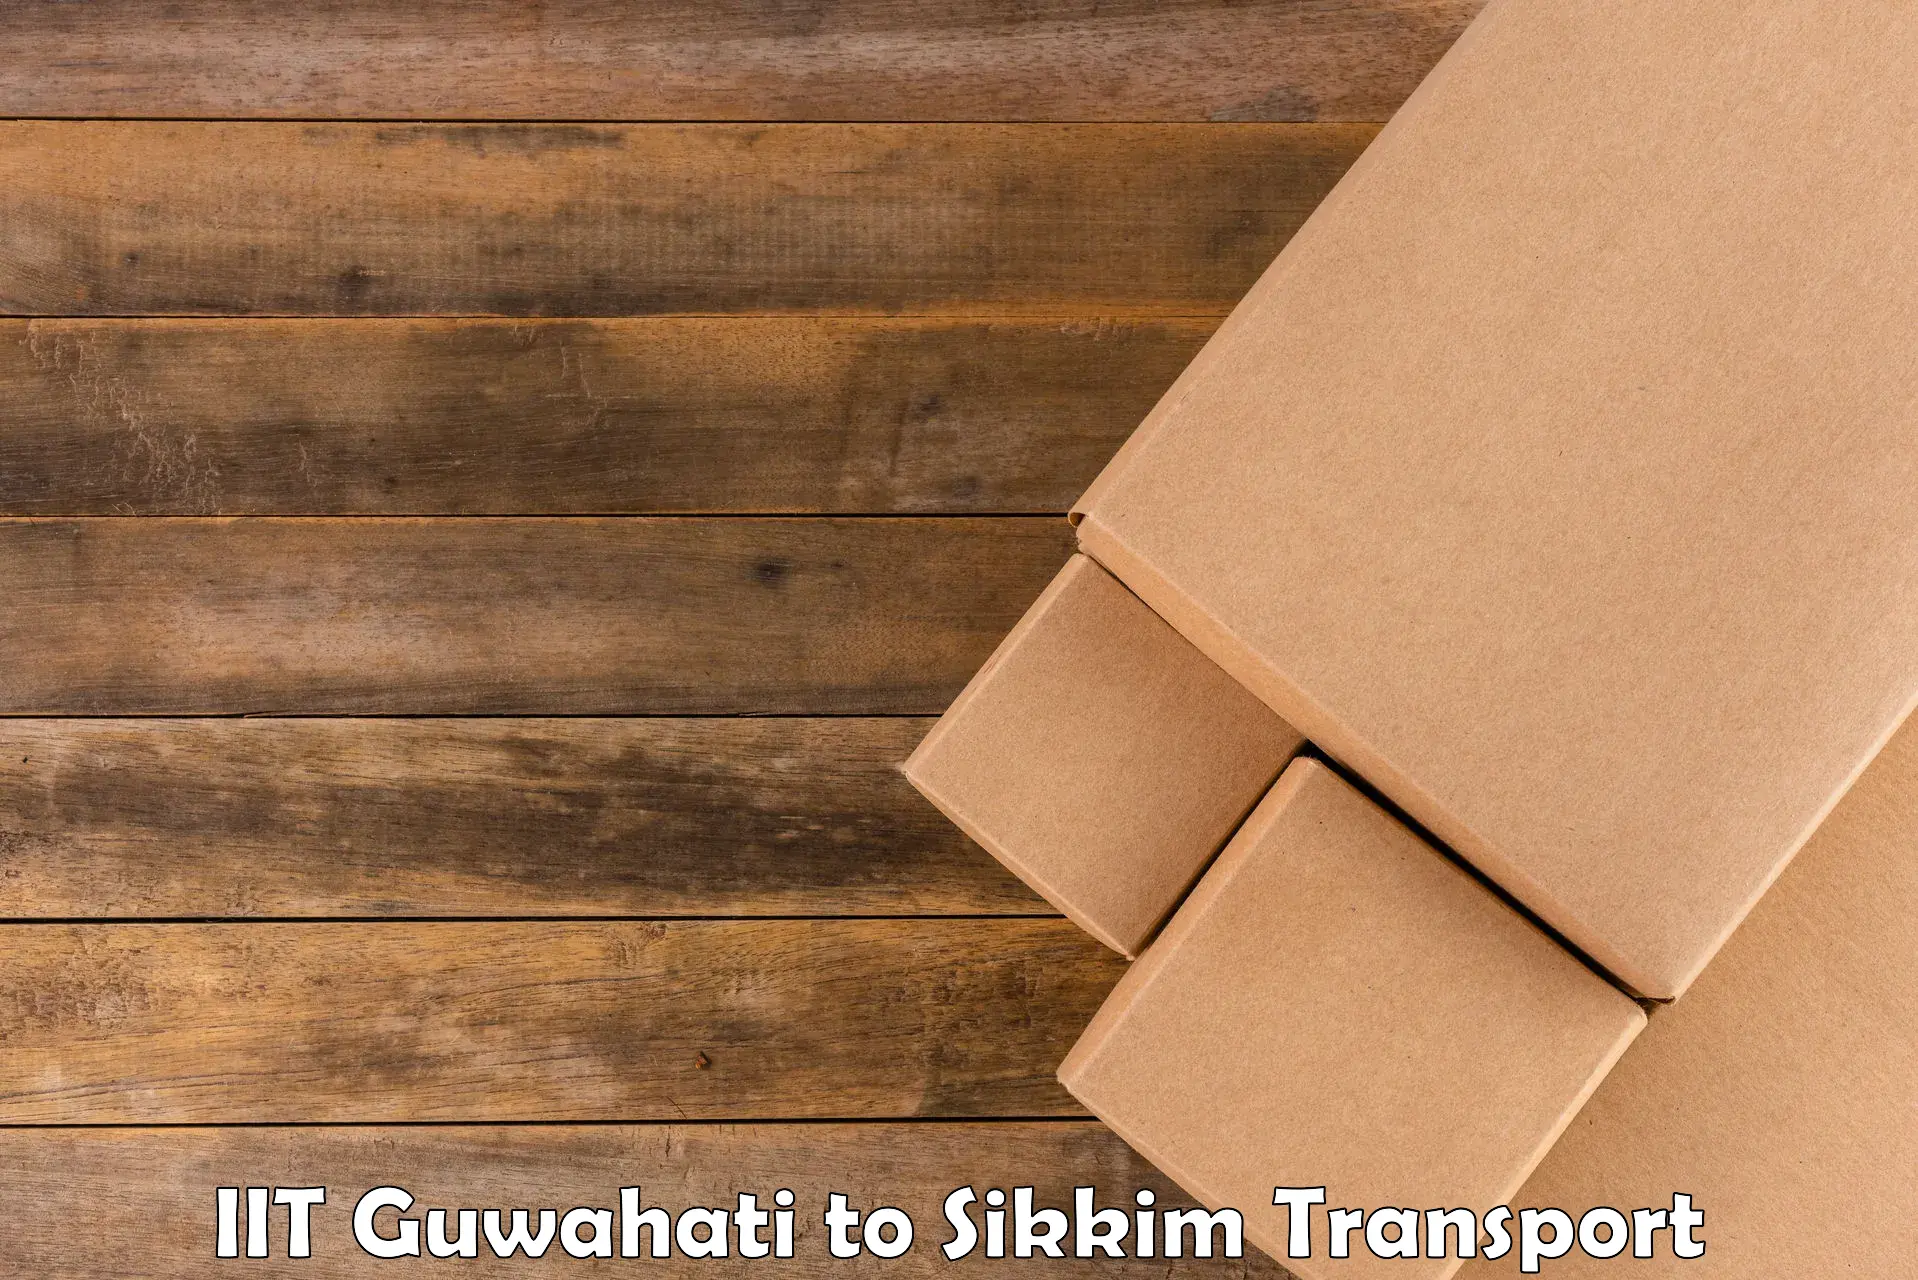 Transport in sharing IIT Guwahati to NIT Sikkim